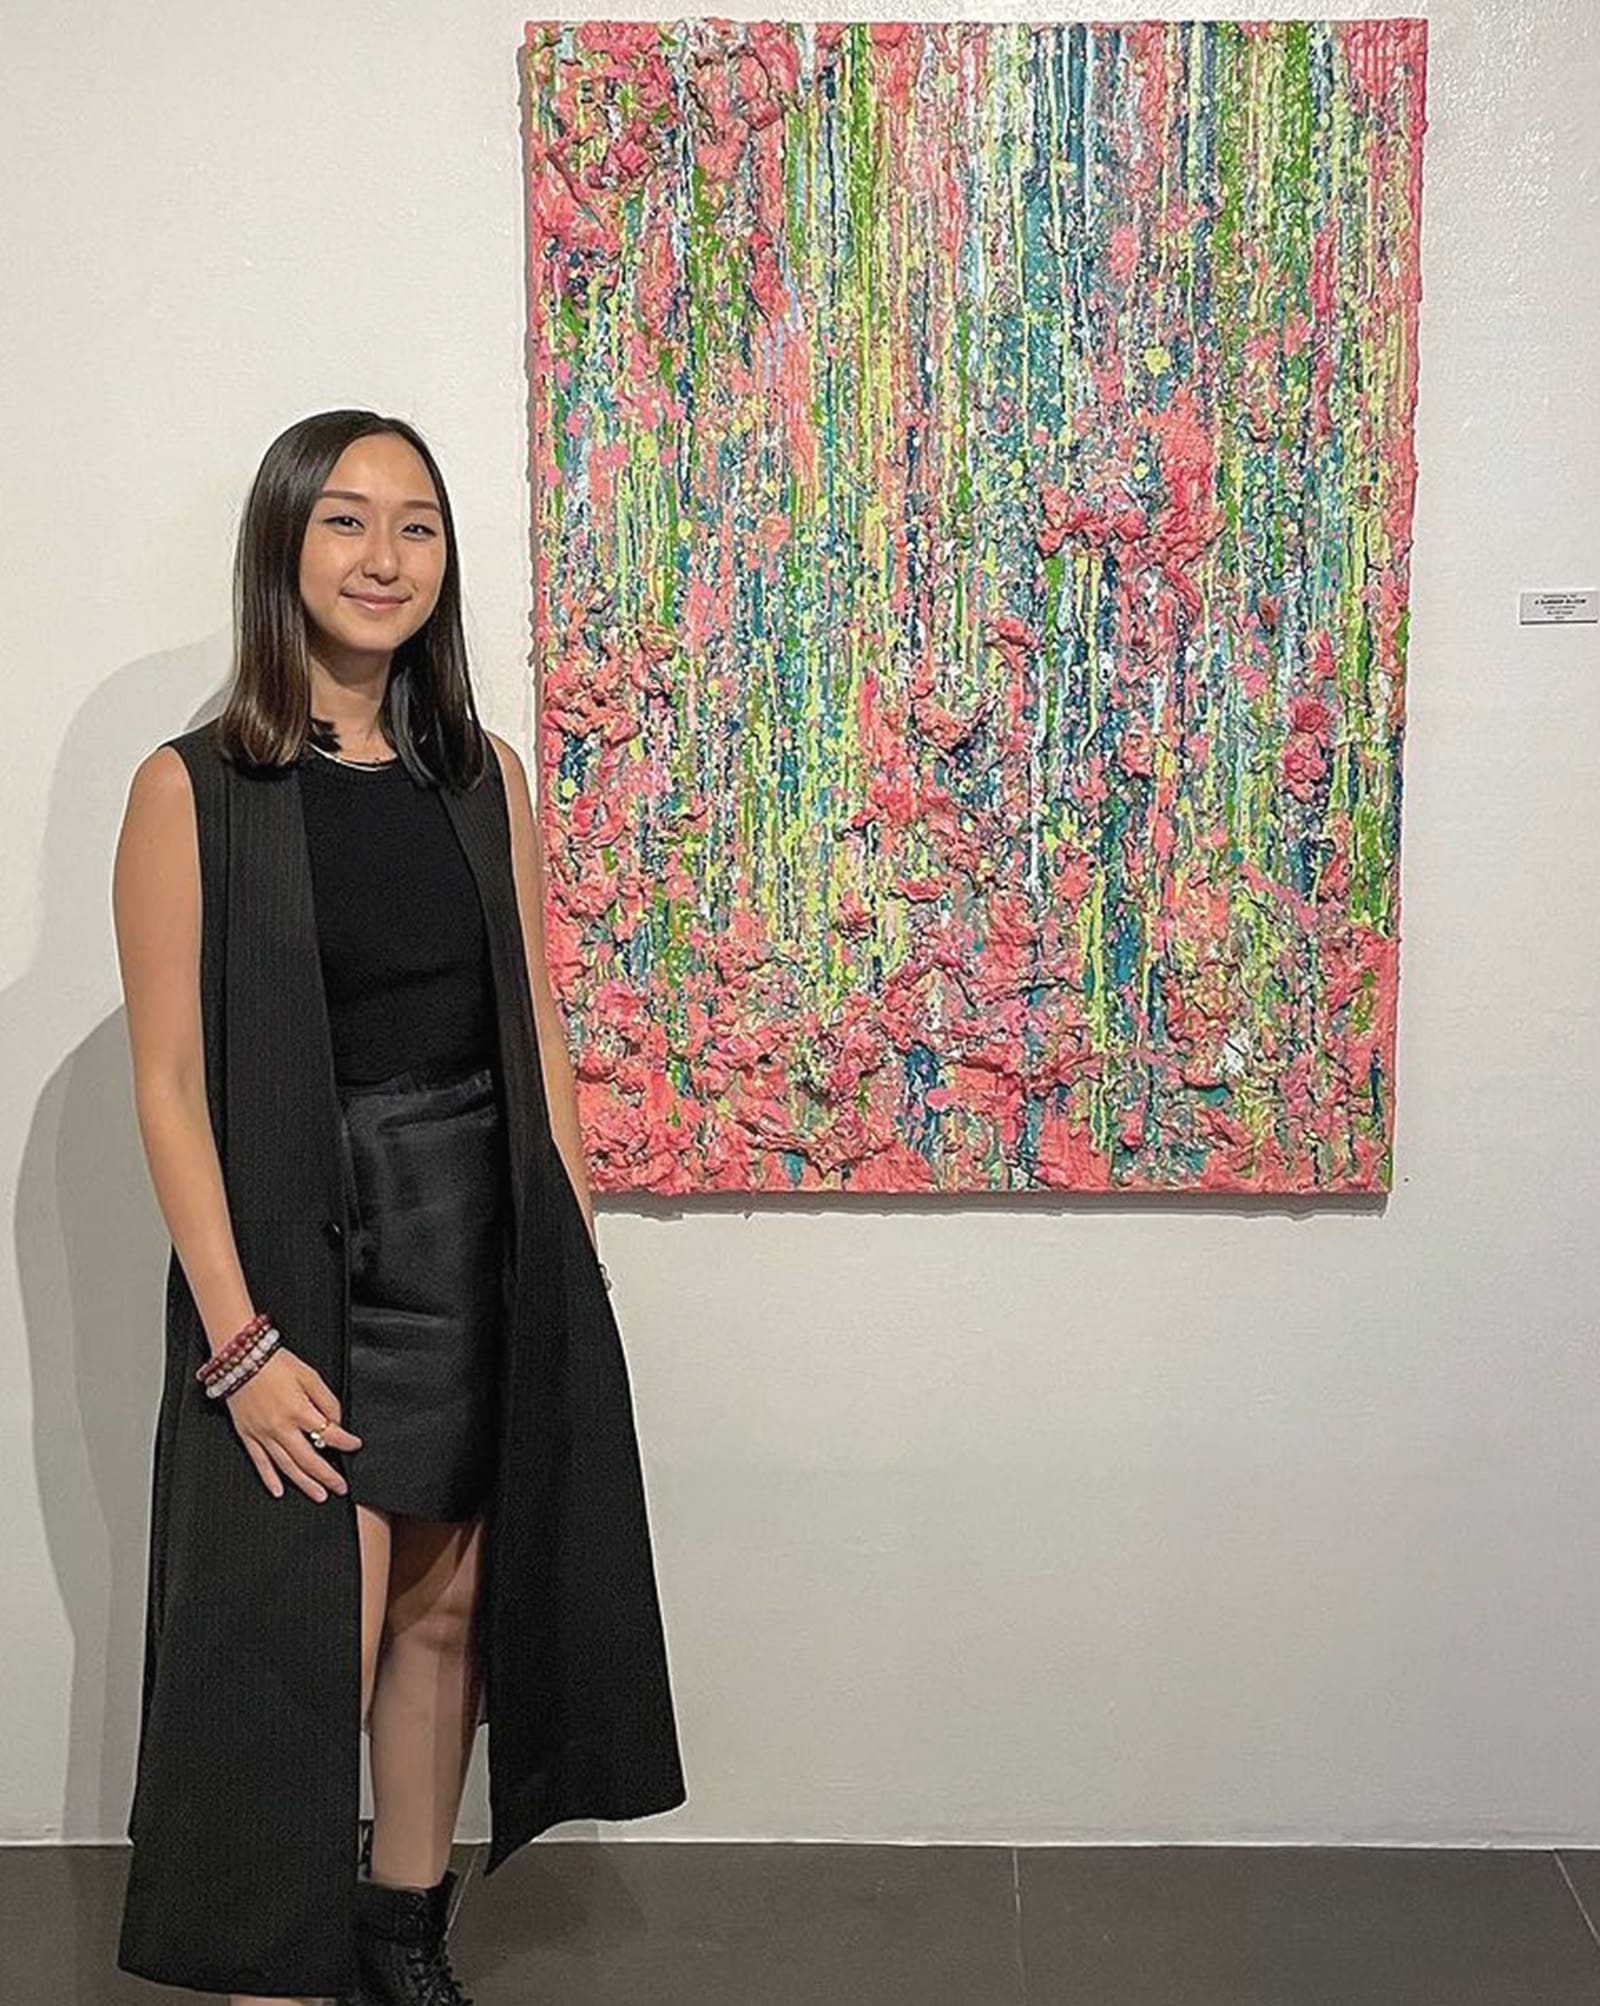 Rosenthal Tee posing beside her art piece